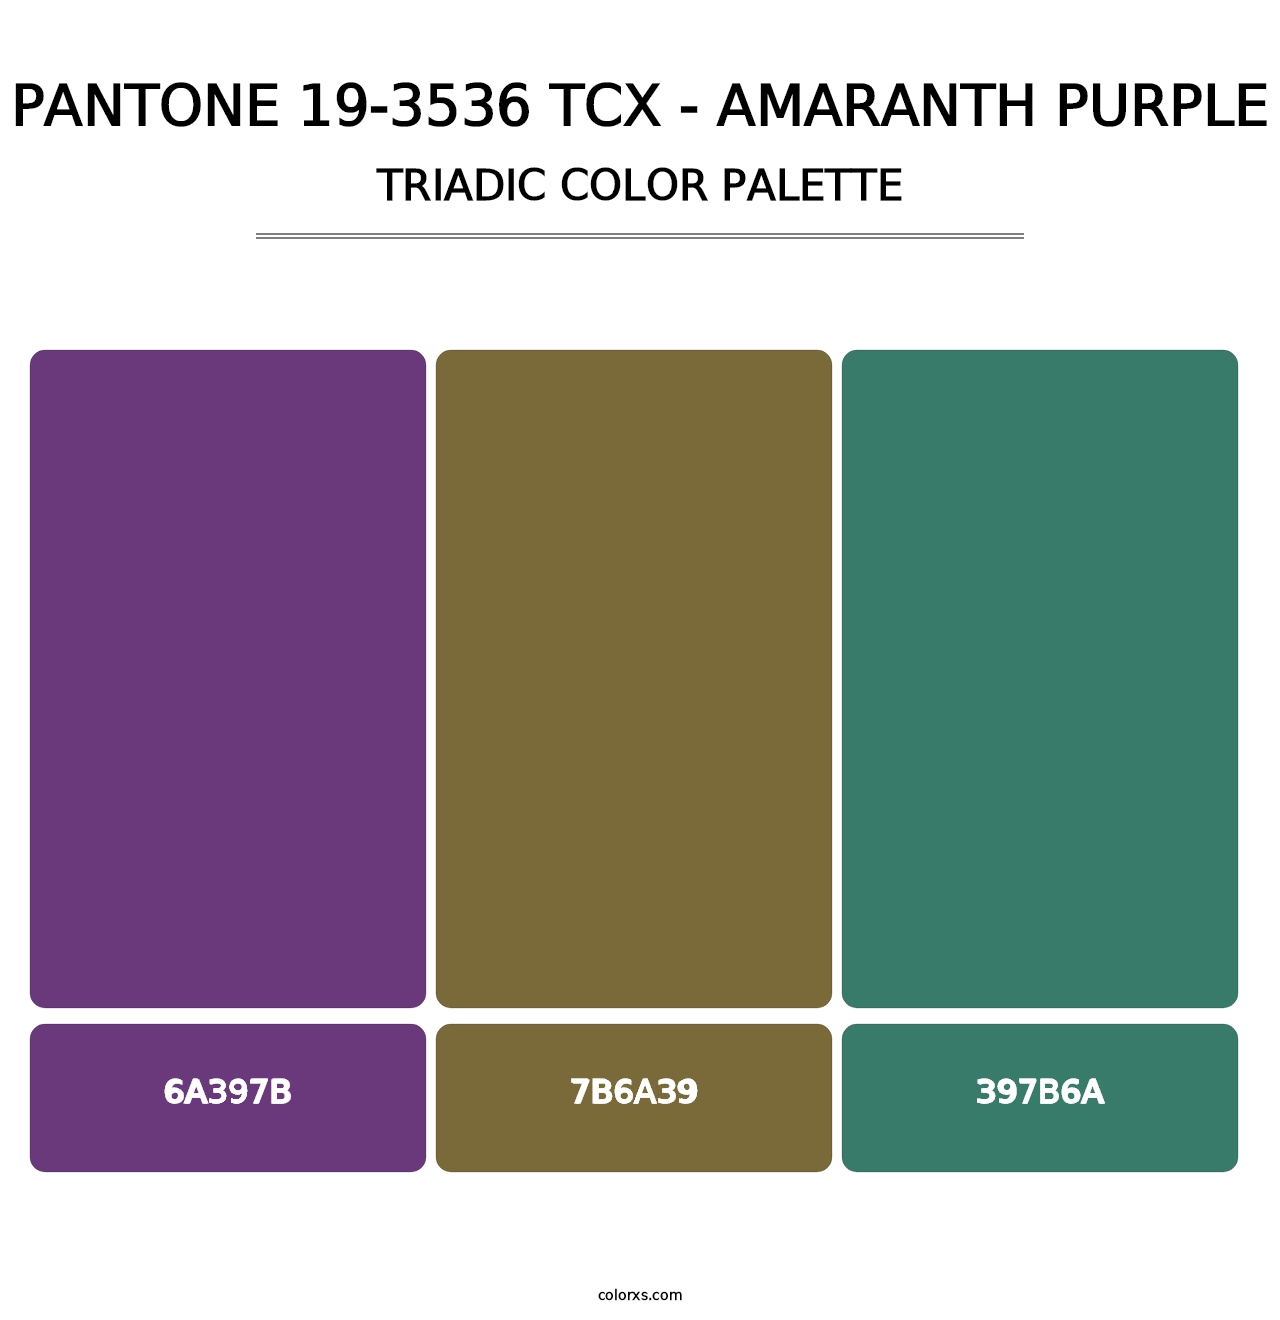 PANTONE 19-3536 TCX - Amaranth Purple - Triadic Color Palette